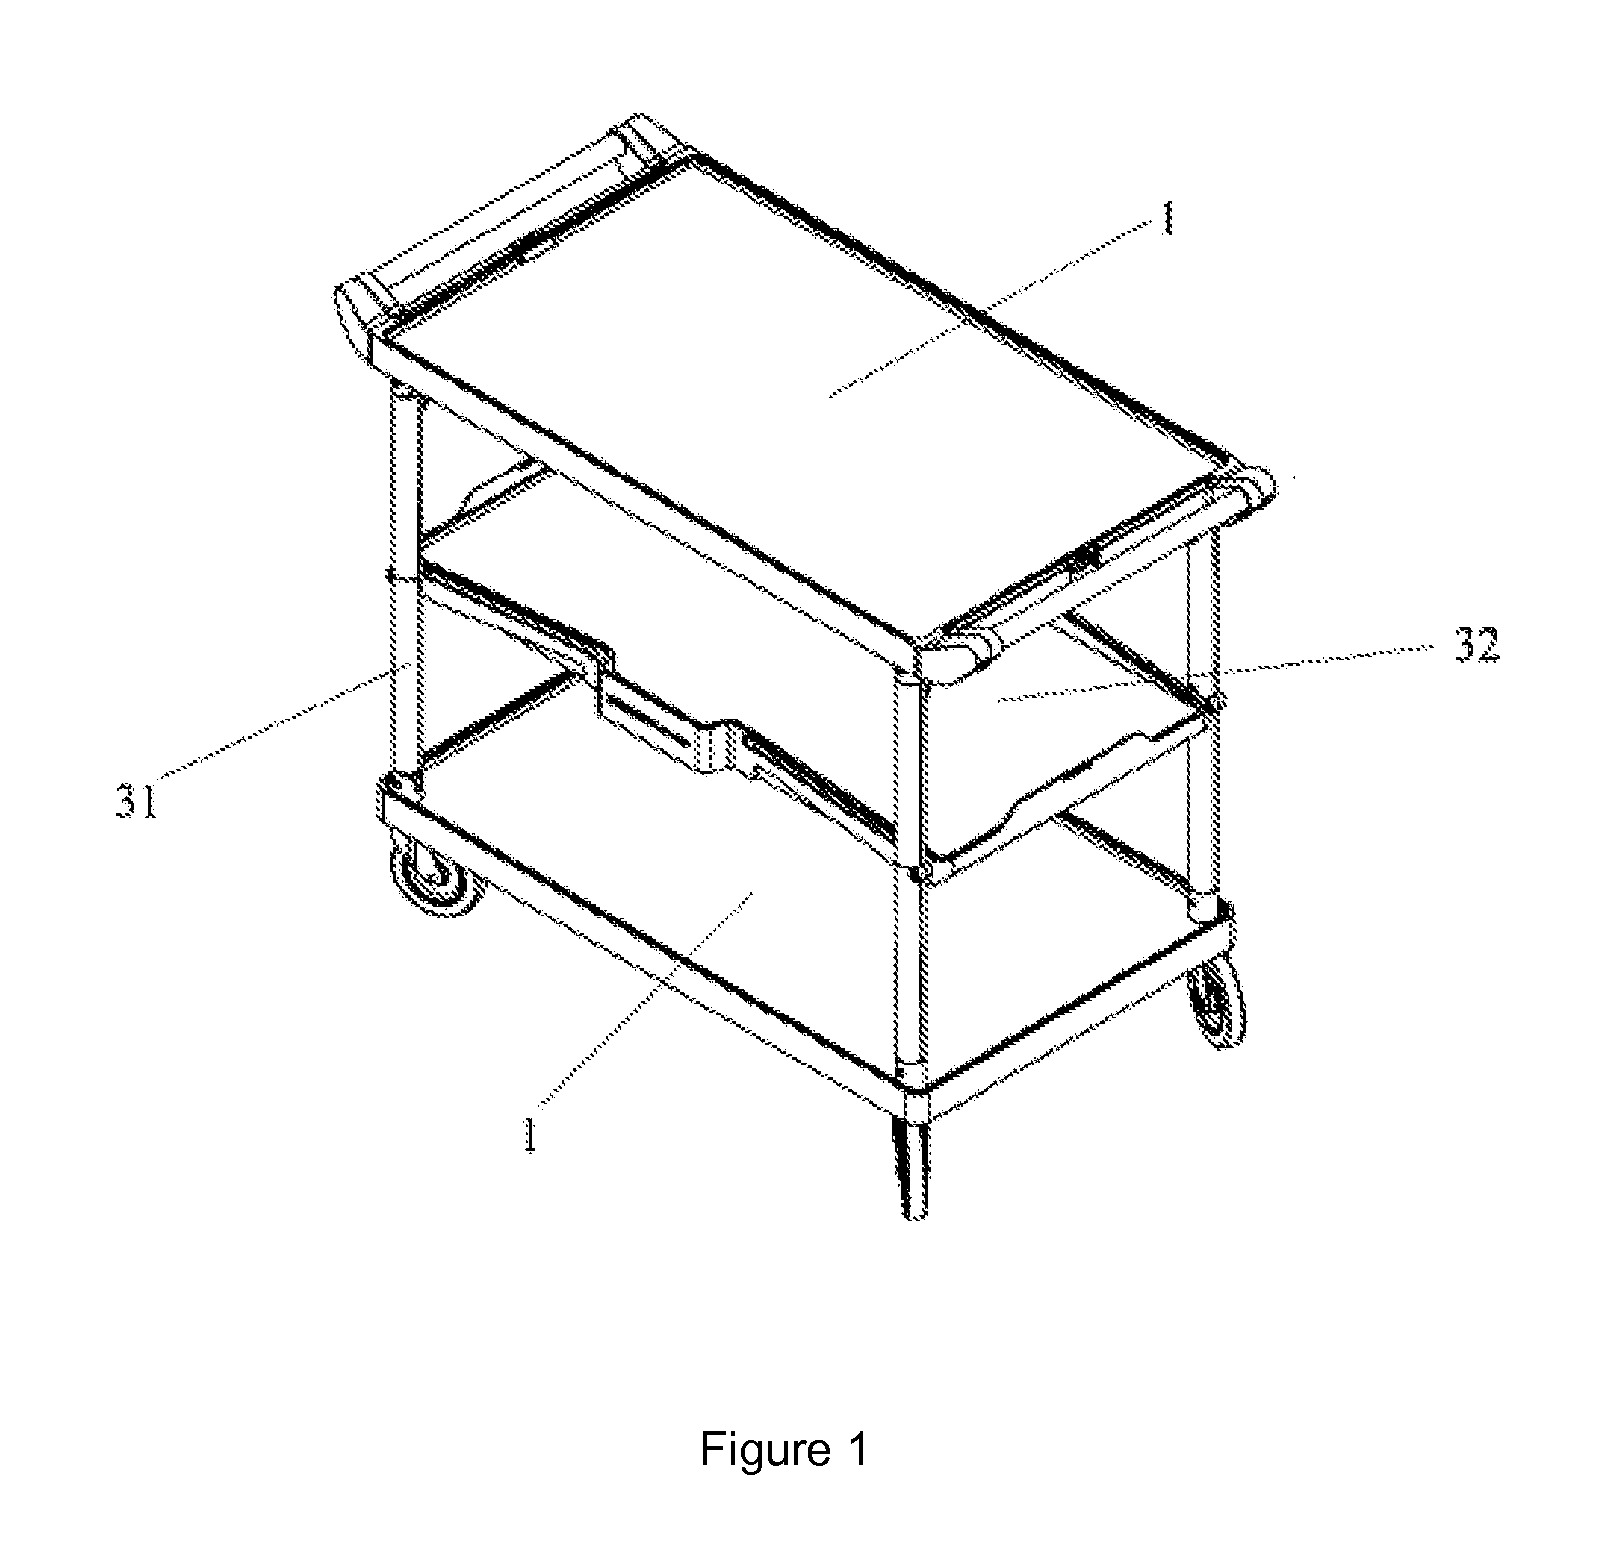 Foldable table mechanism